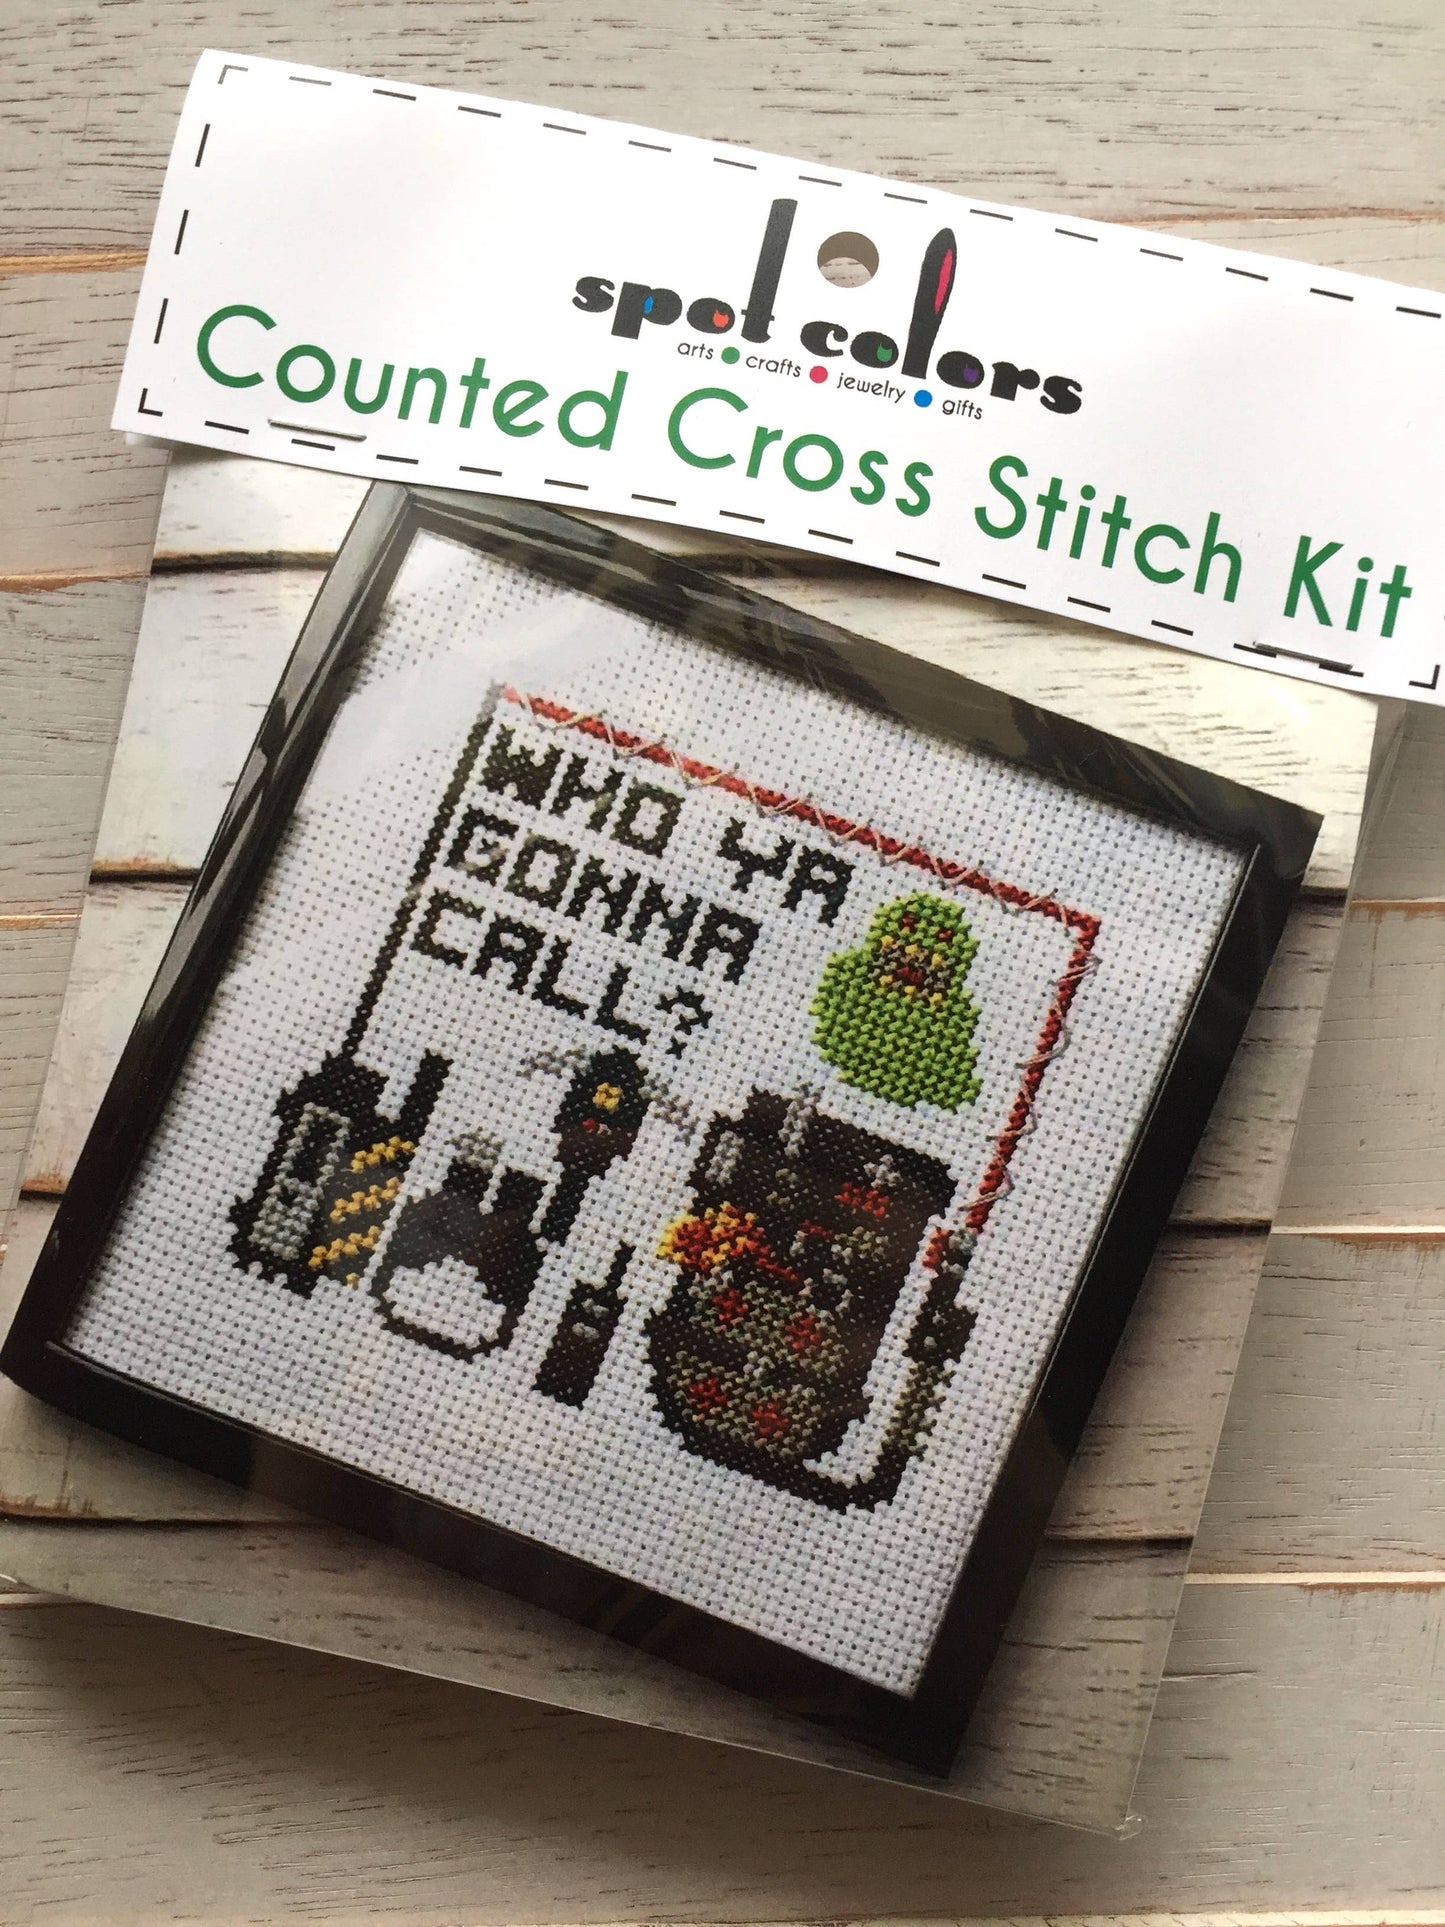 Who Ya Gonna Call - Ghostbusters Stitch Kit